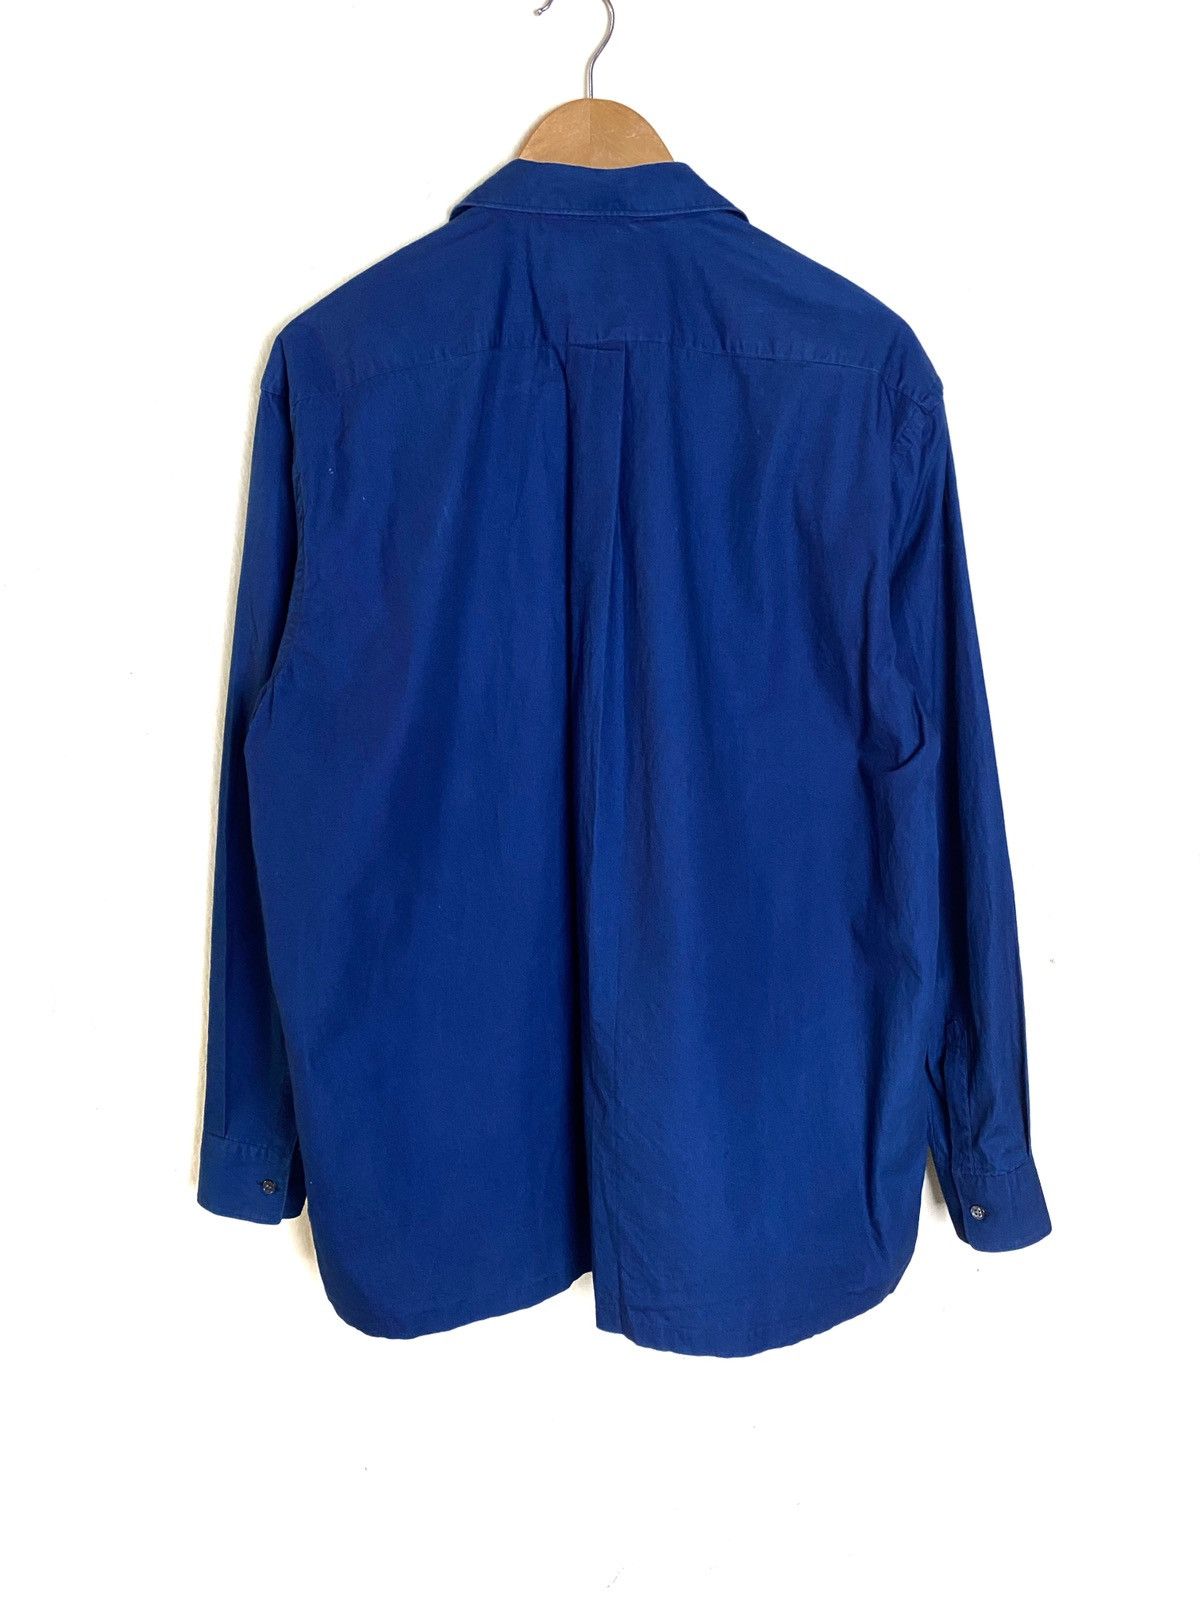 CDG Comme Des Garcons Zipper Long Sleeve Shirt France Made - 6